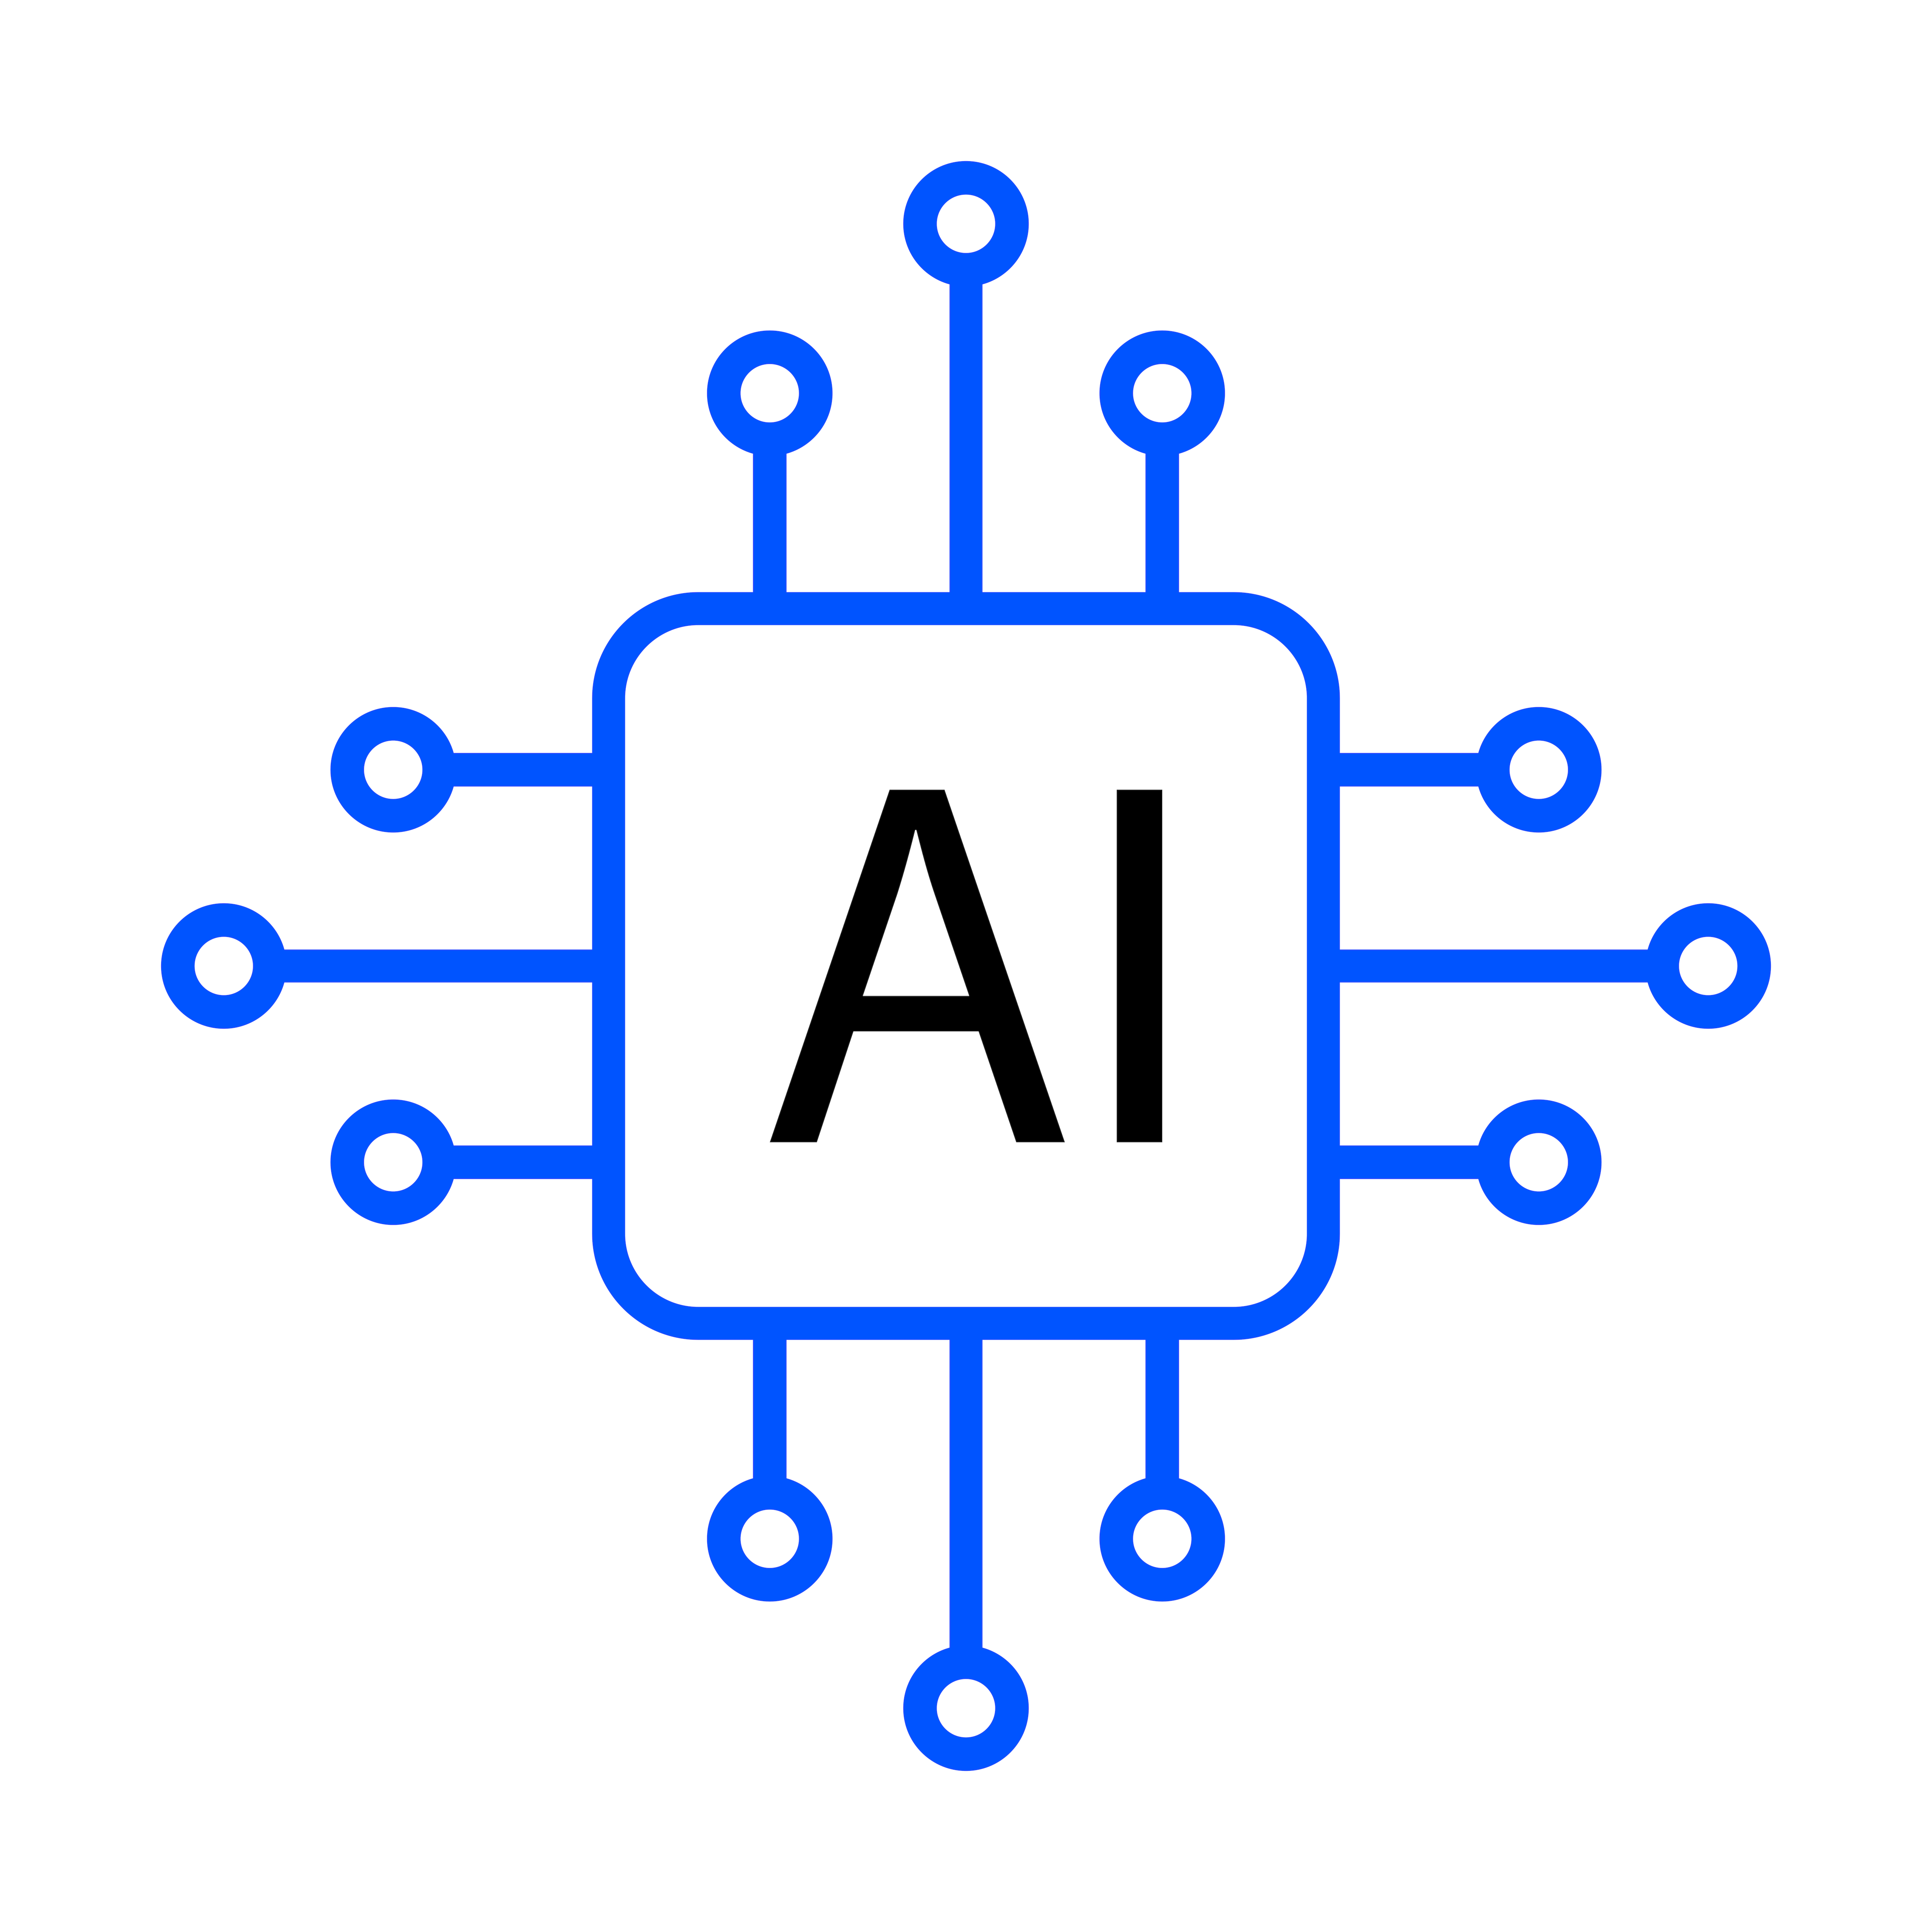 AI Services